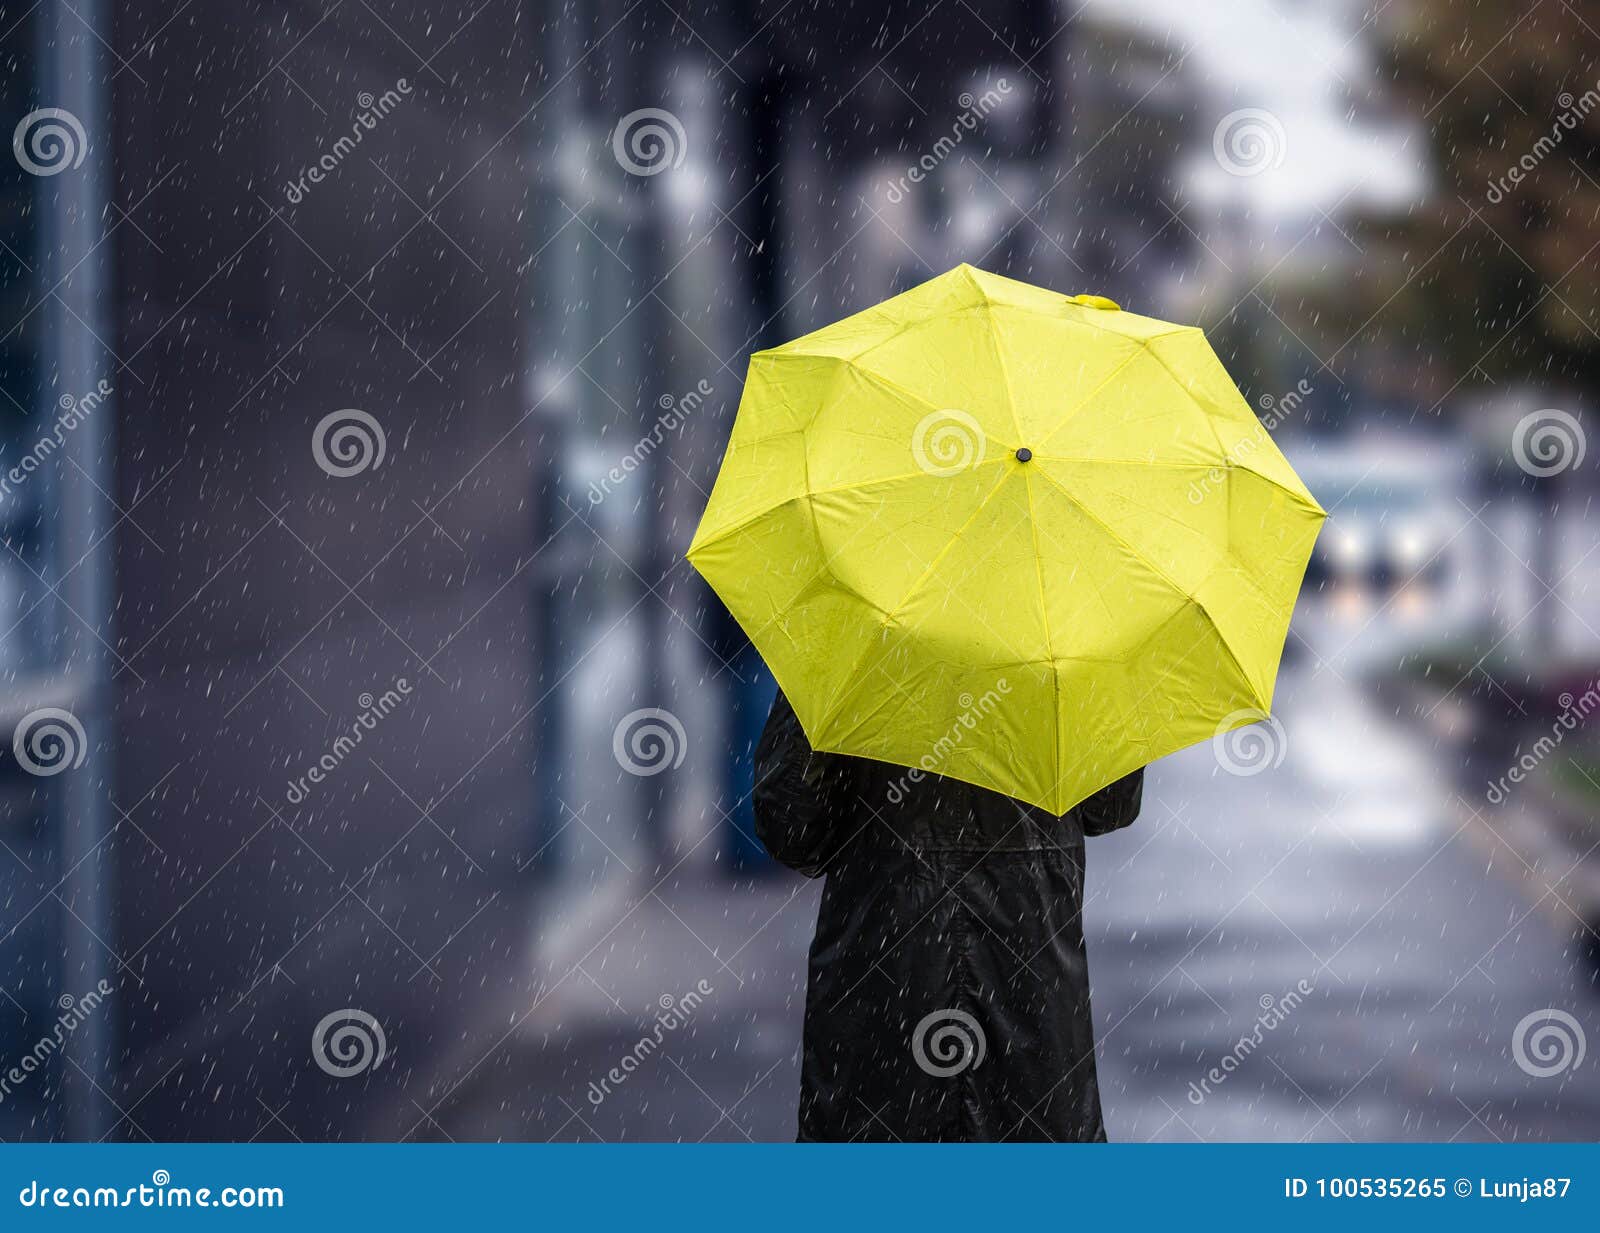 walking on rainy day with yellow umbrella